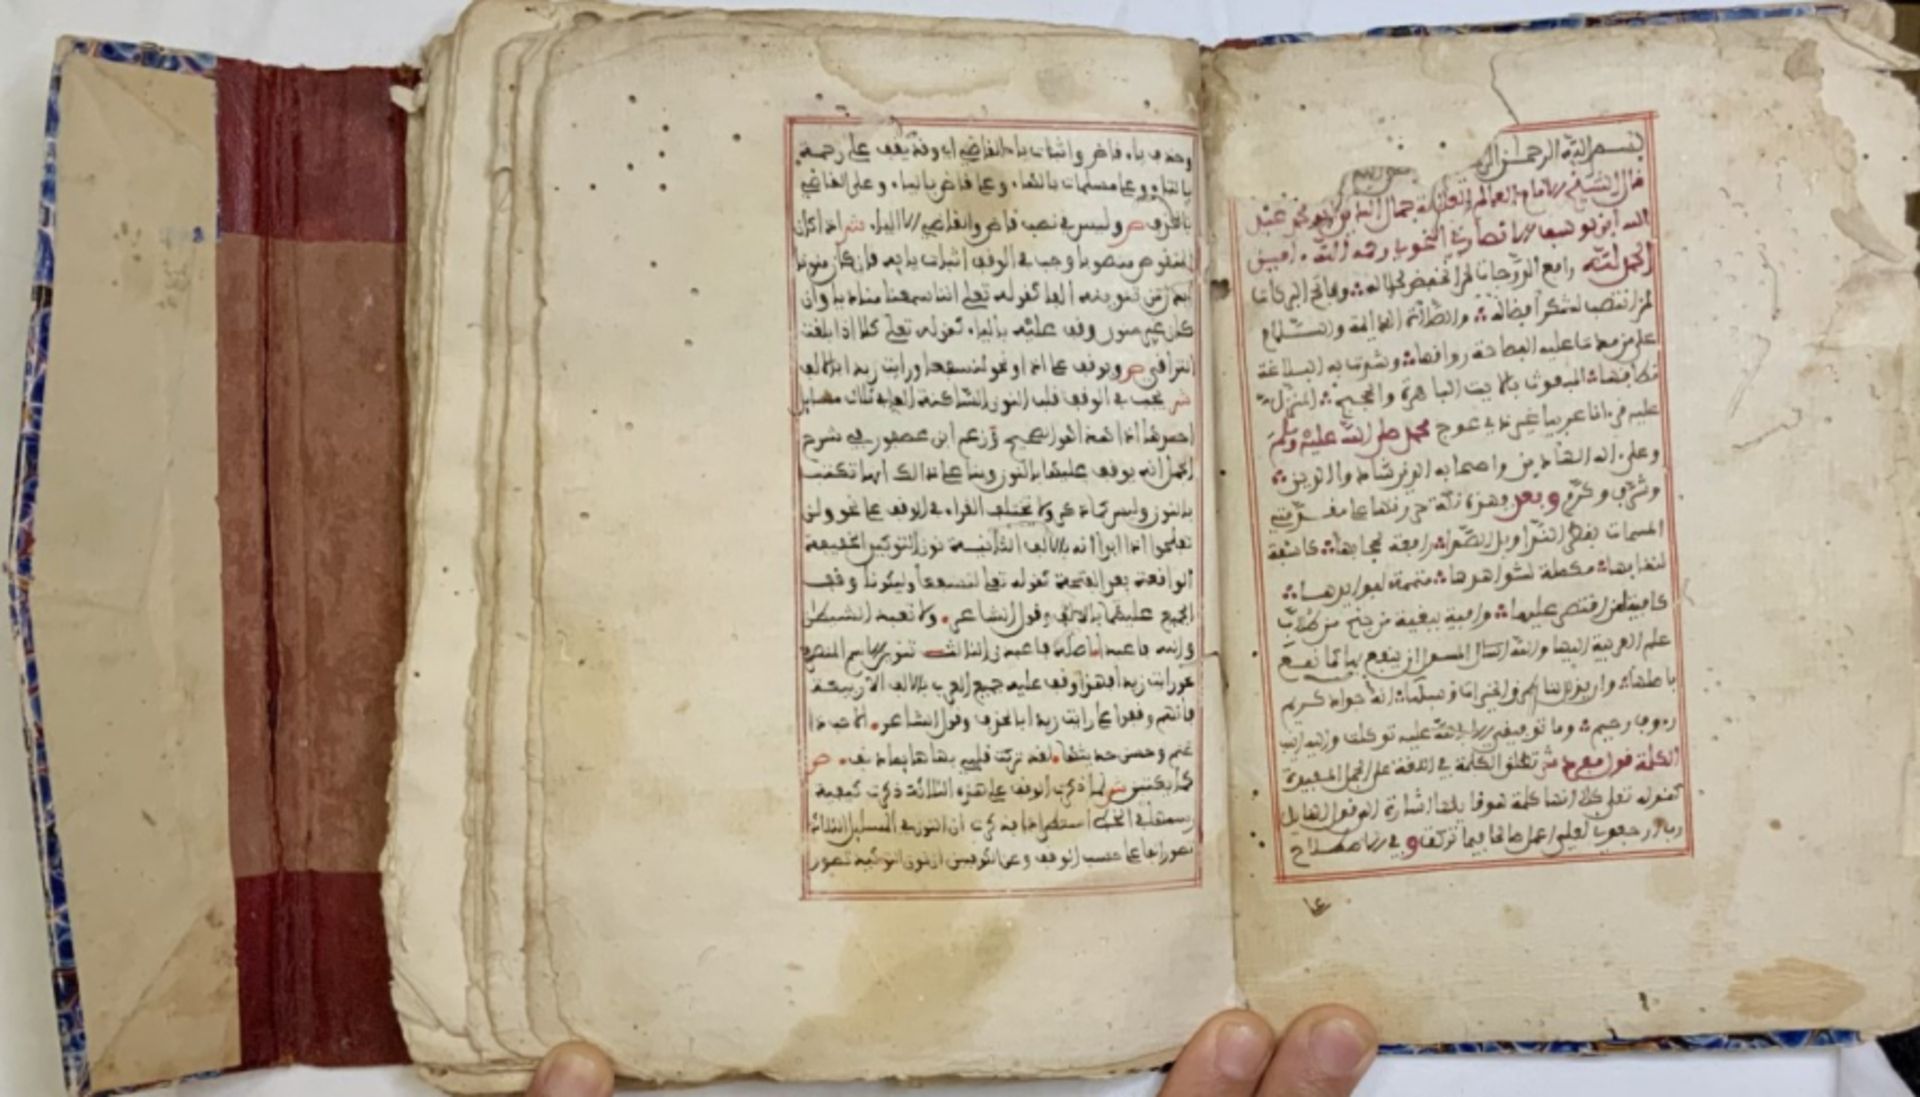 An Islamic manuscript on morphology and rhetoric